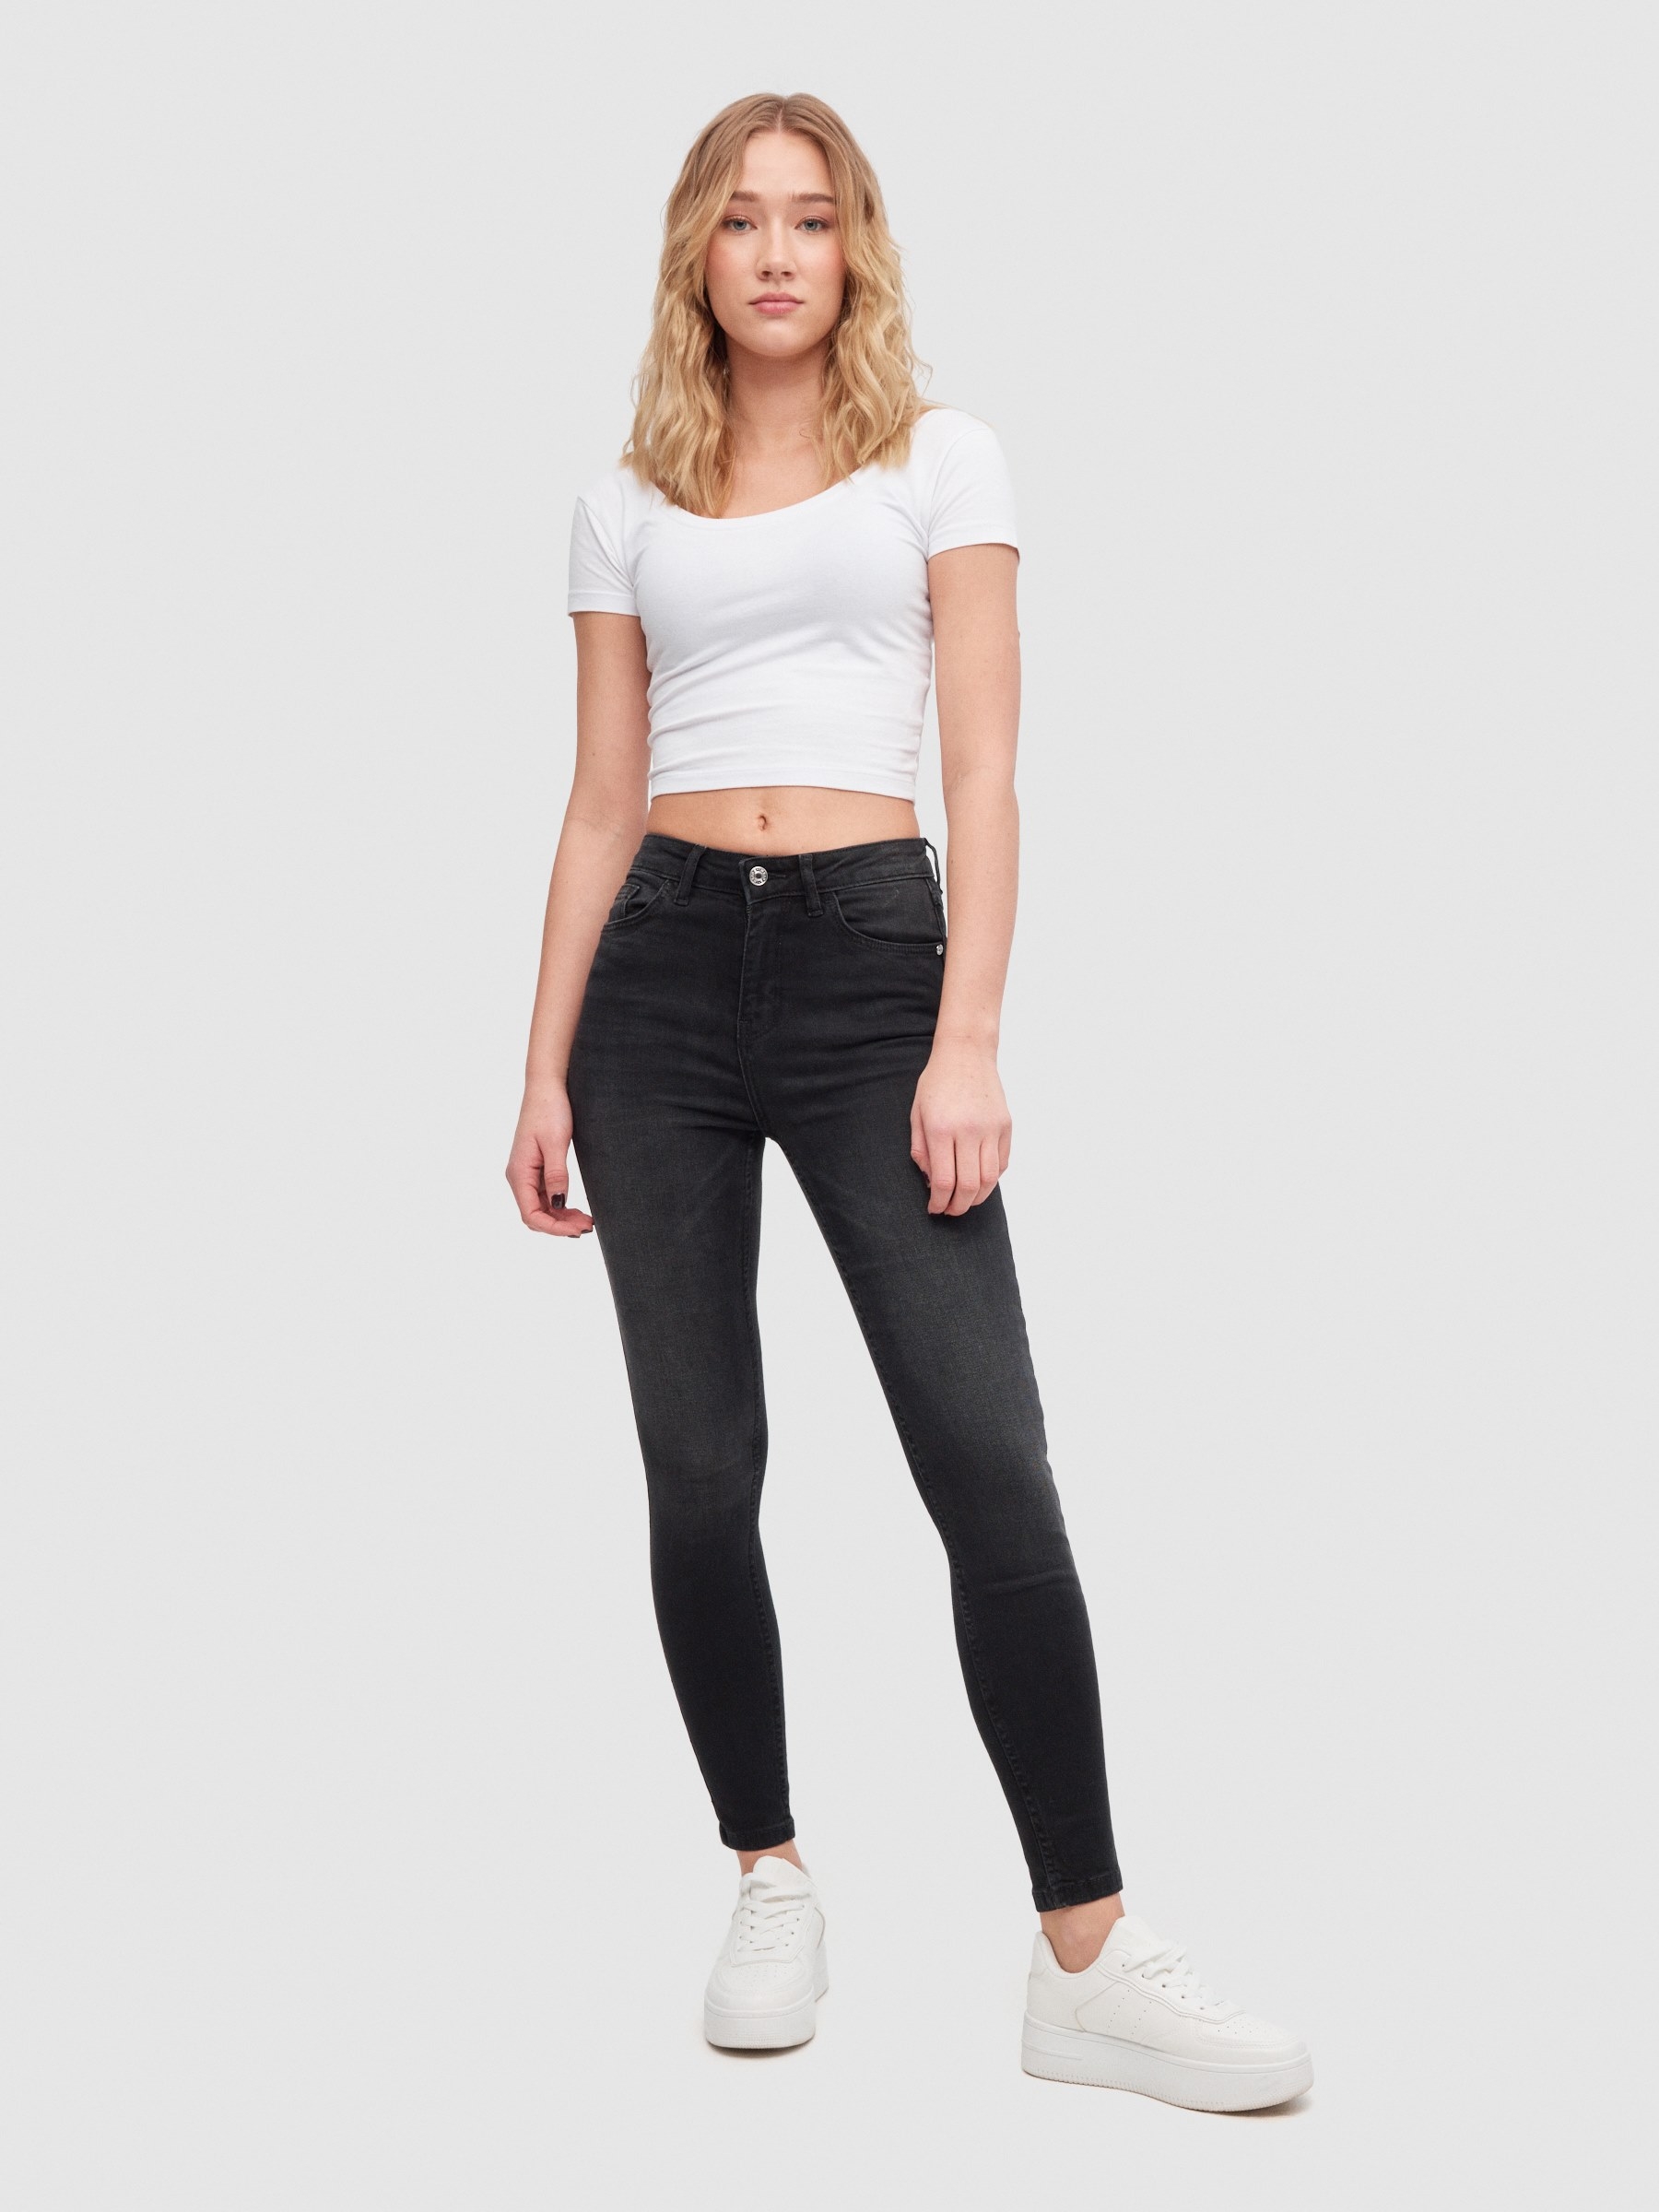 Compre Moda feminina skinny slim fit jeans casual cintura alta